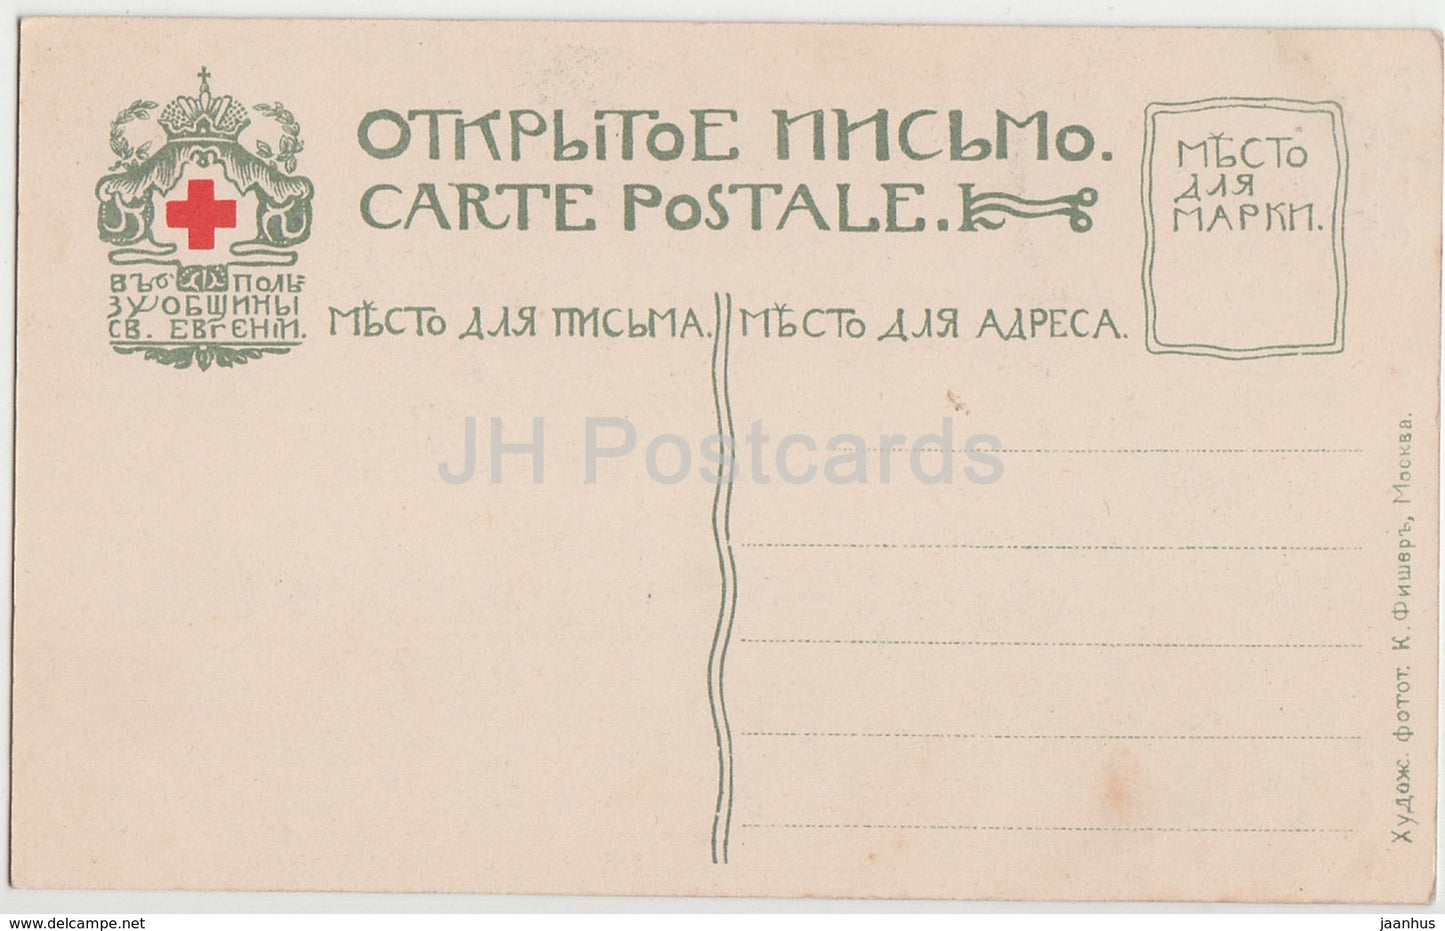 A la Montagne - maison - Petite Russie - Malorossiya - Petite Russie - Ukraine - carte postale ancienne - Russie Impériale